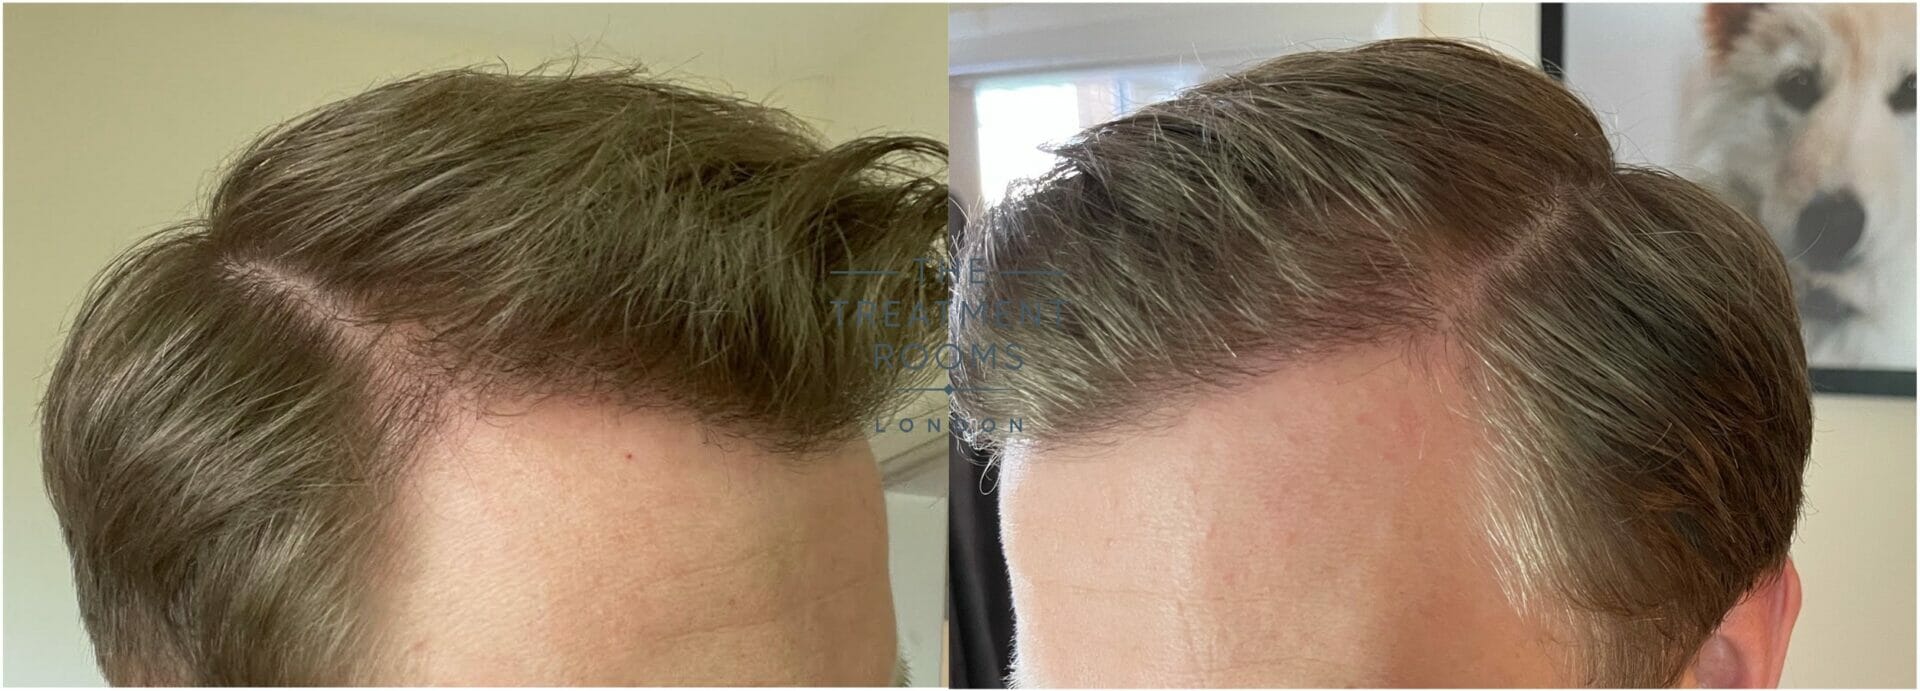 Density effect tricopigmentation after hair transplant (4 months)